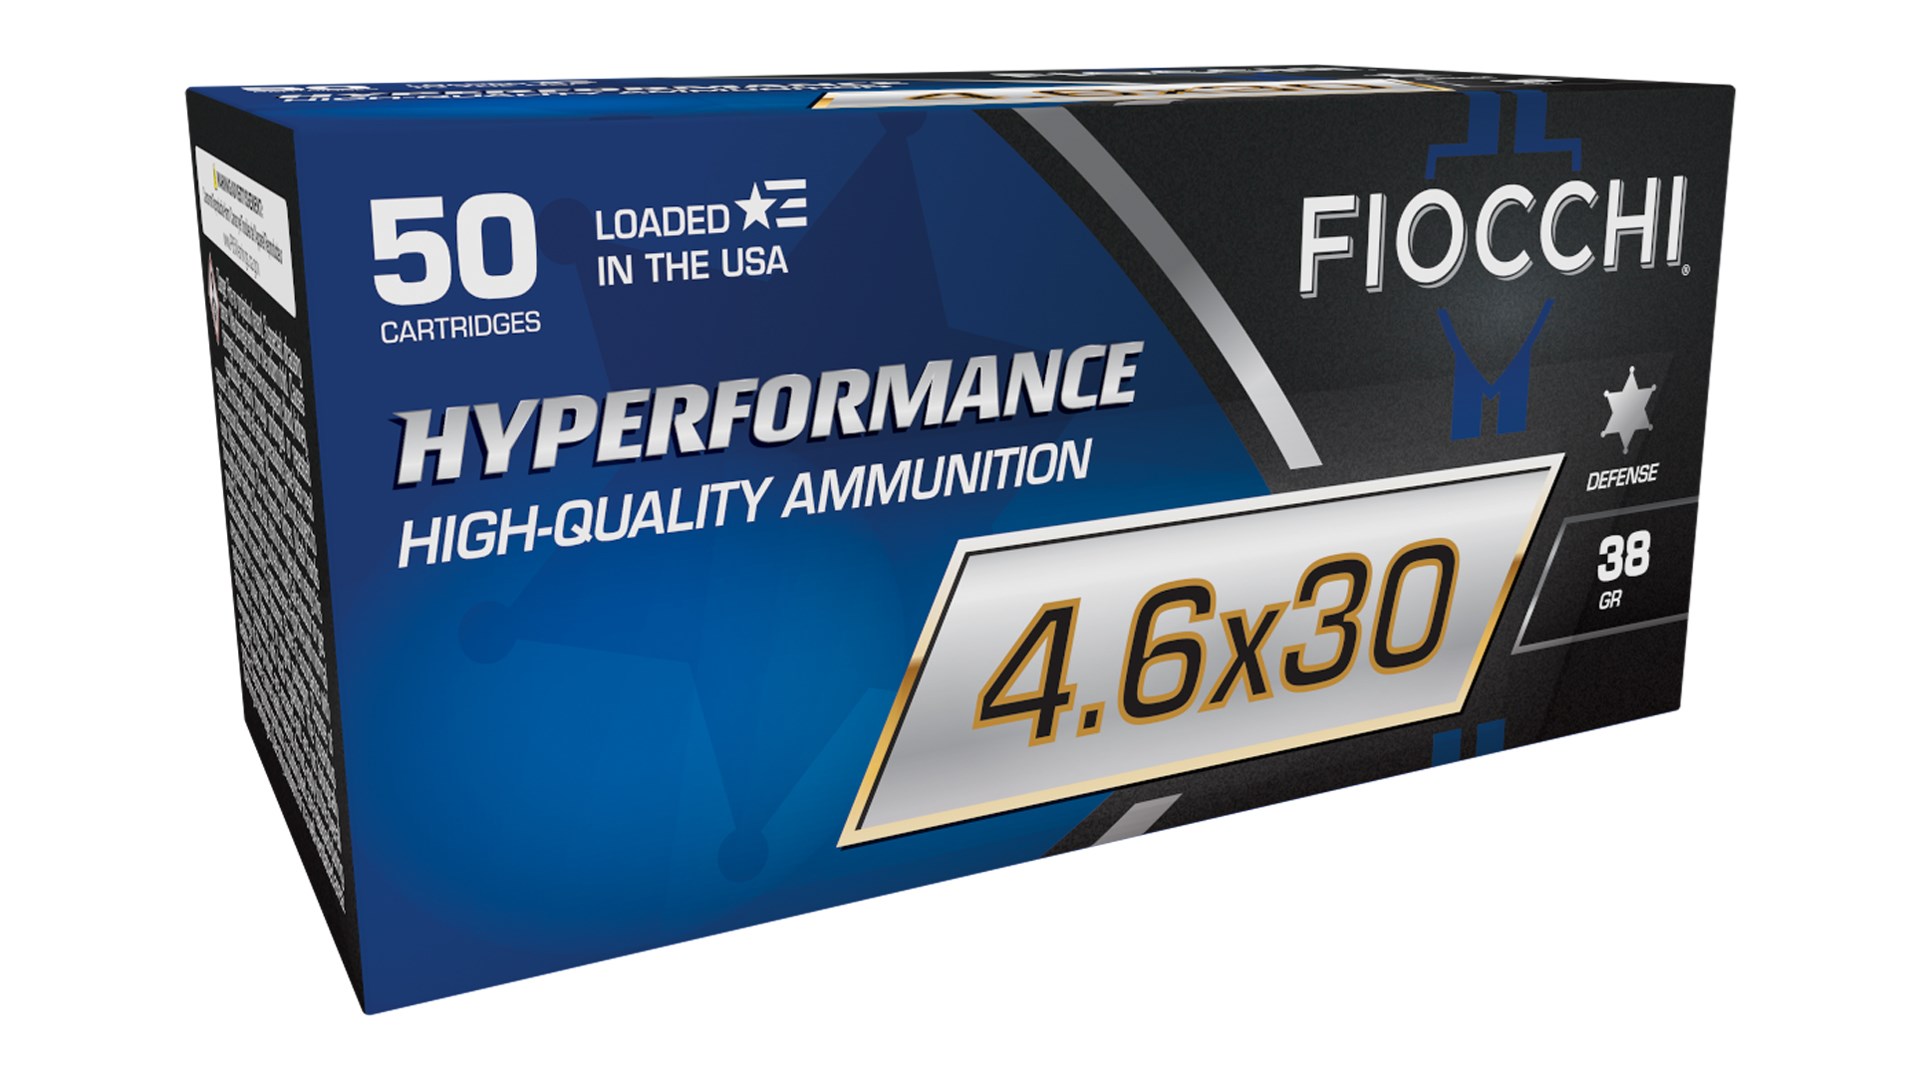 fiocchi 4.6x30 mm hyperformance ammunition packaging SHOT Show 2023 new product announcement